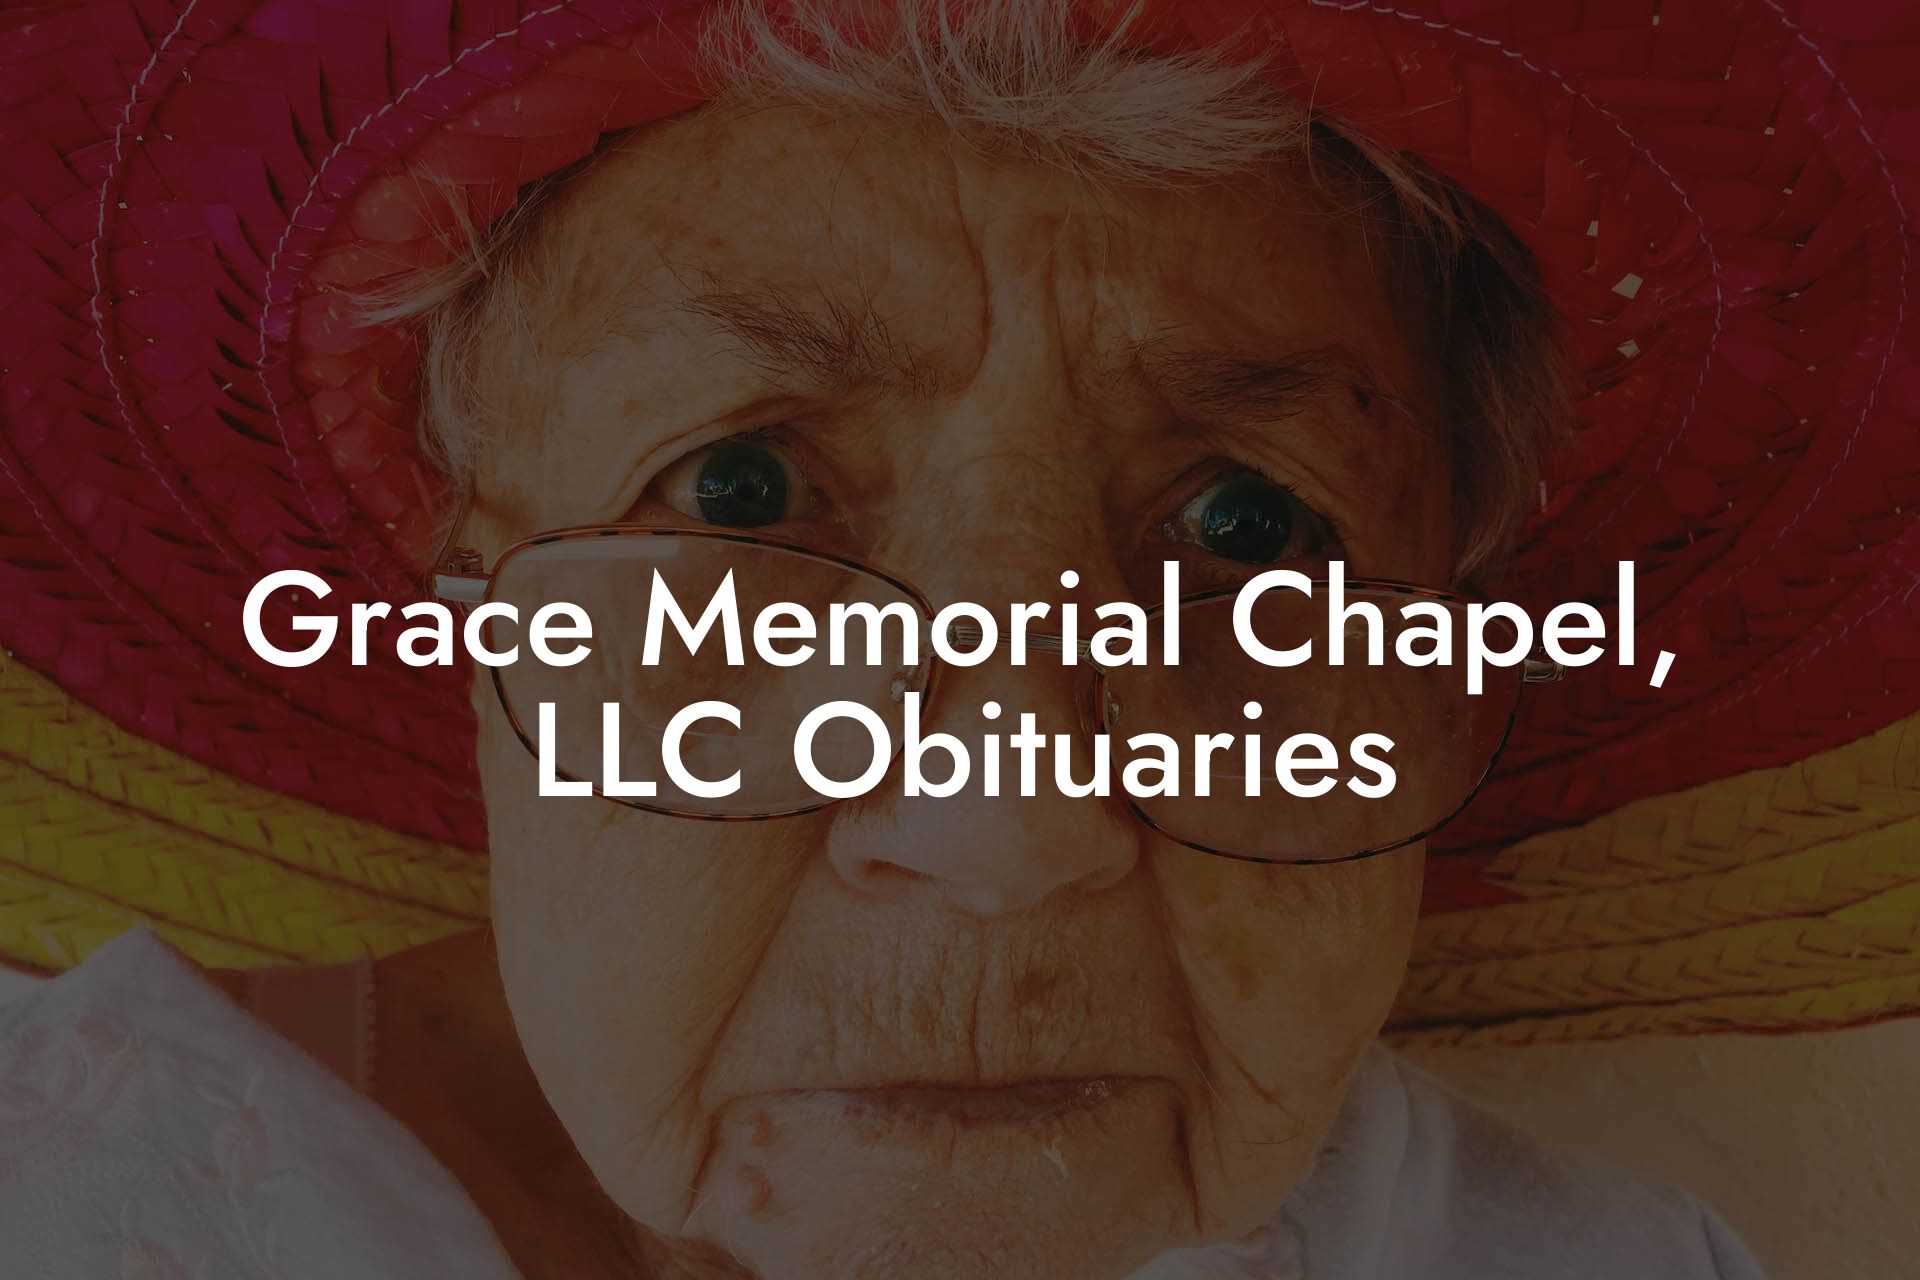 Grace Memorial Chapel LLC. Obituaries